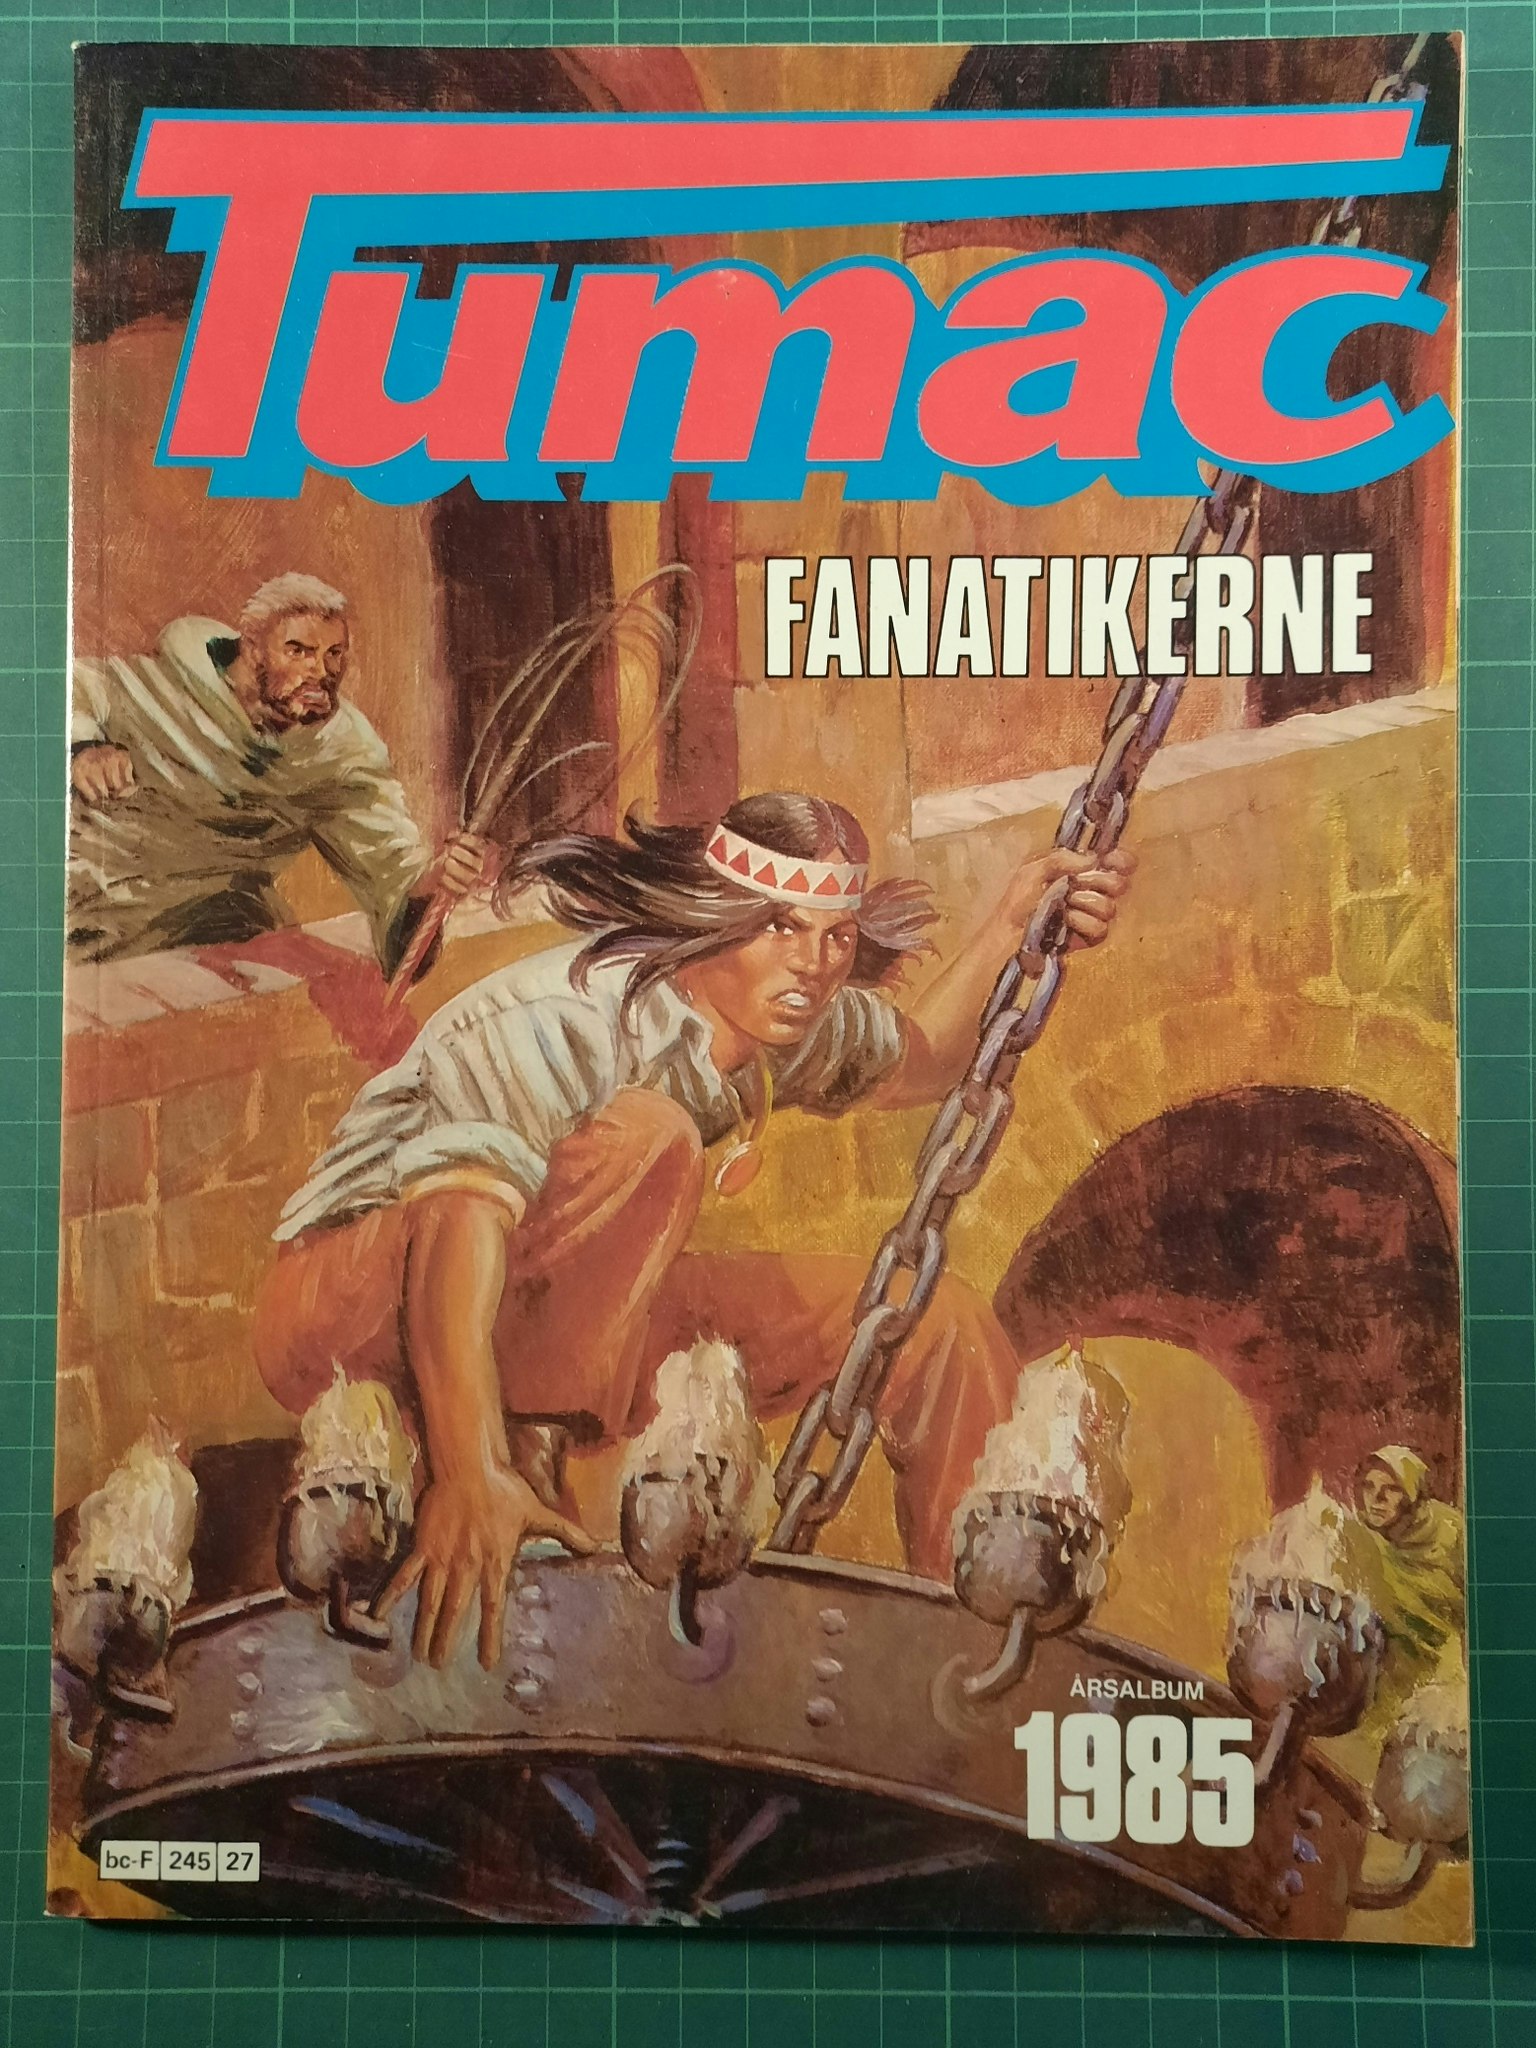 Tumac årsalbum 1985